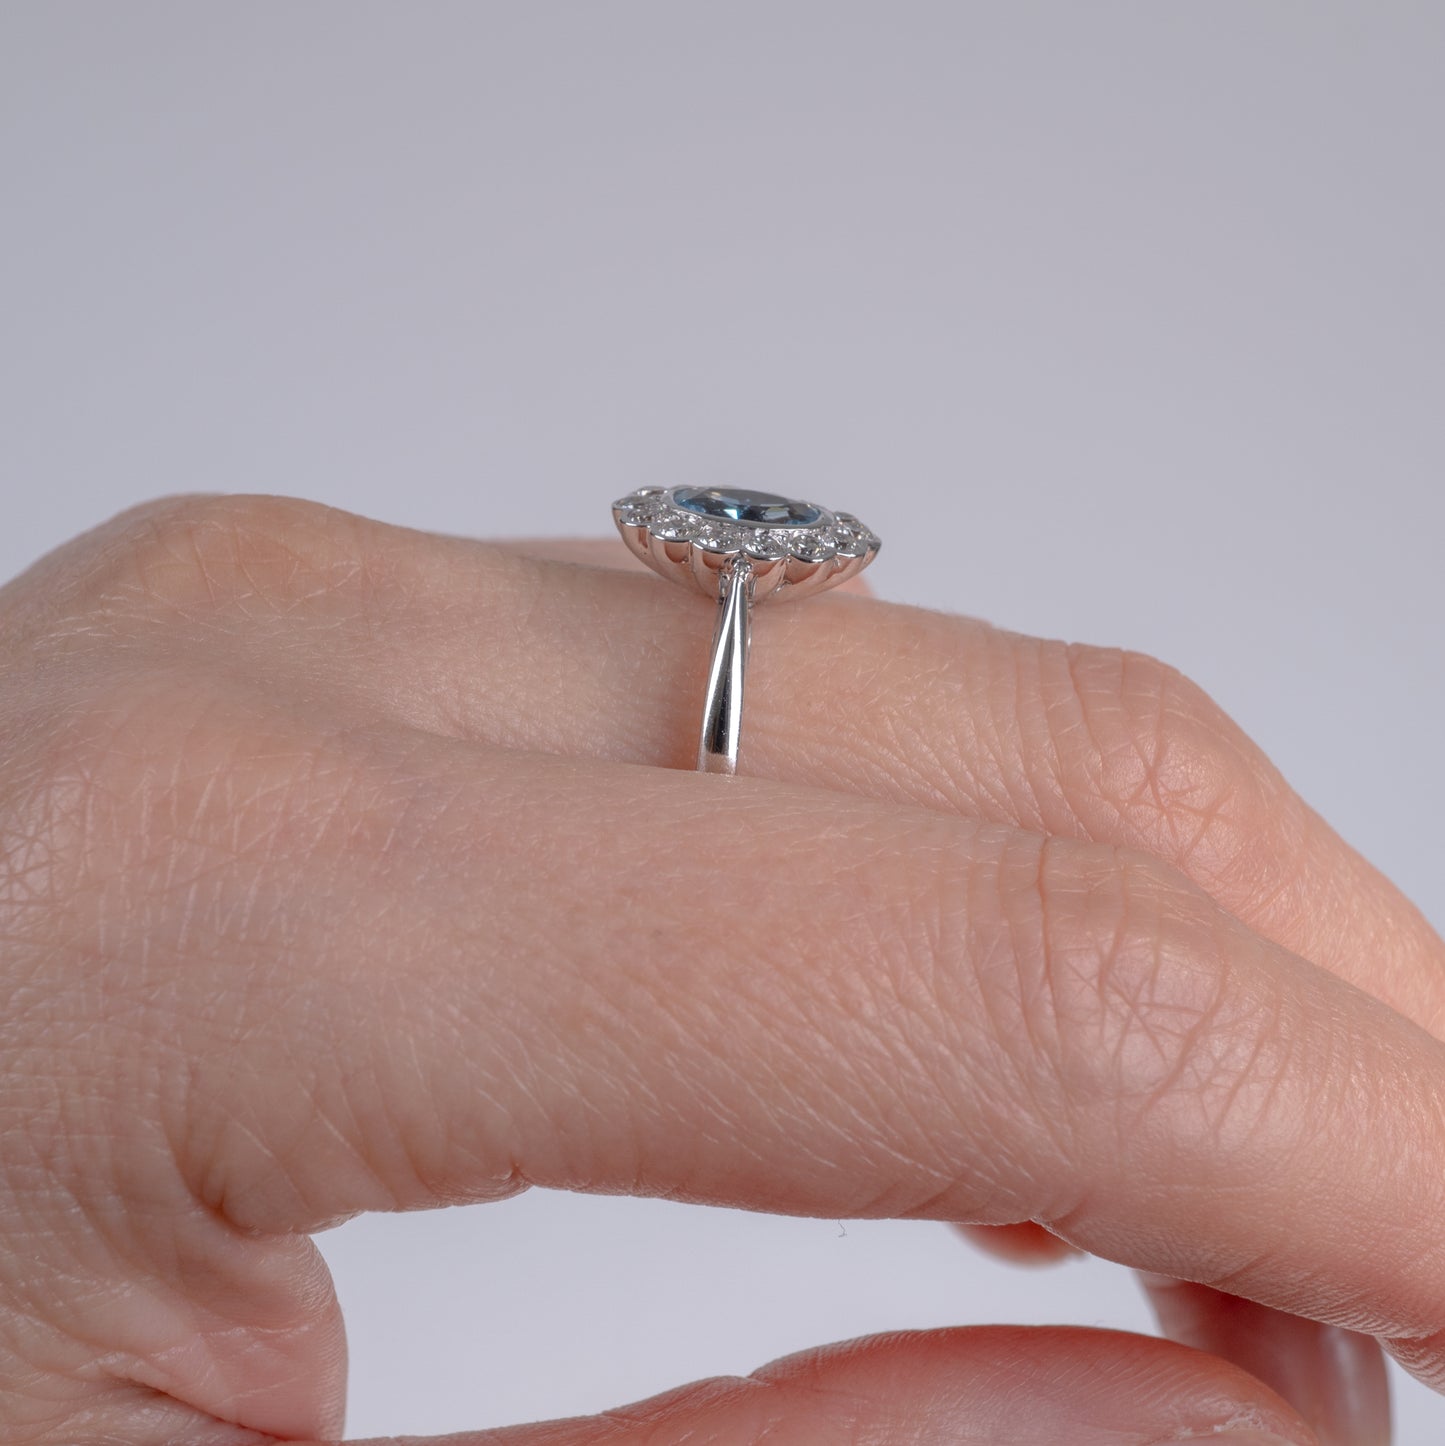 18K White Gold Art Deco Style Aquamarine & Diamond Halo Ring-Gemstone Rings-Hunters Fine Jewellery